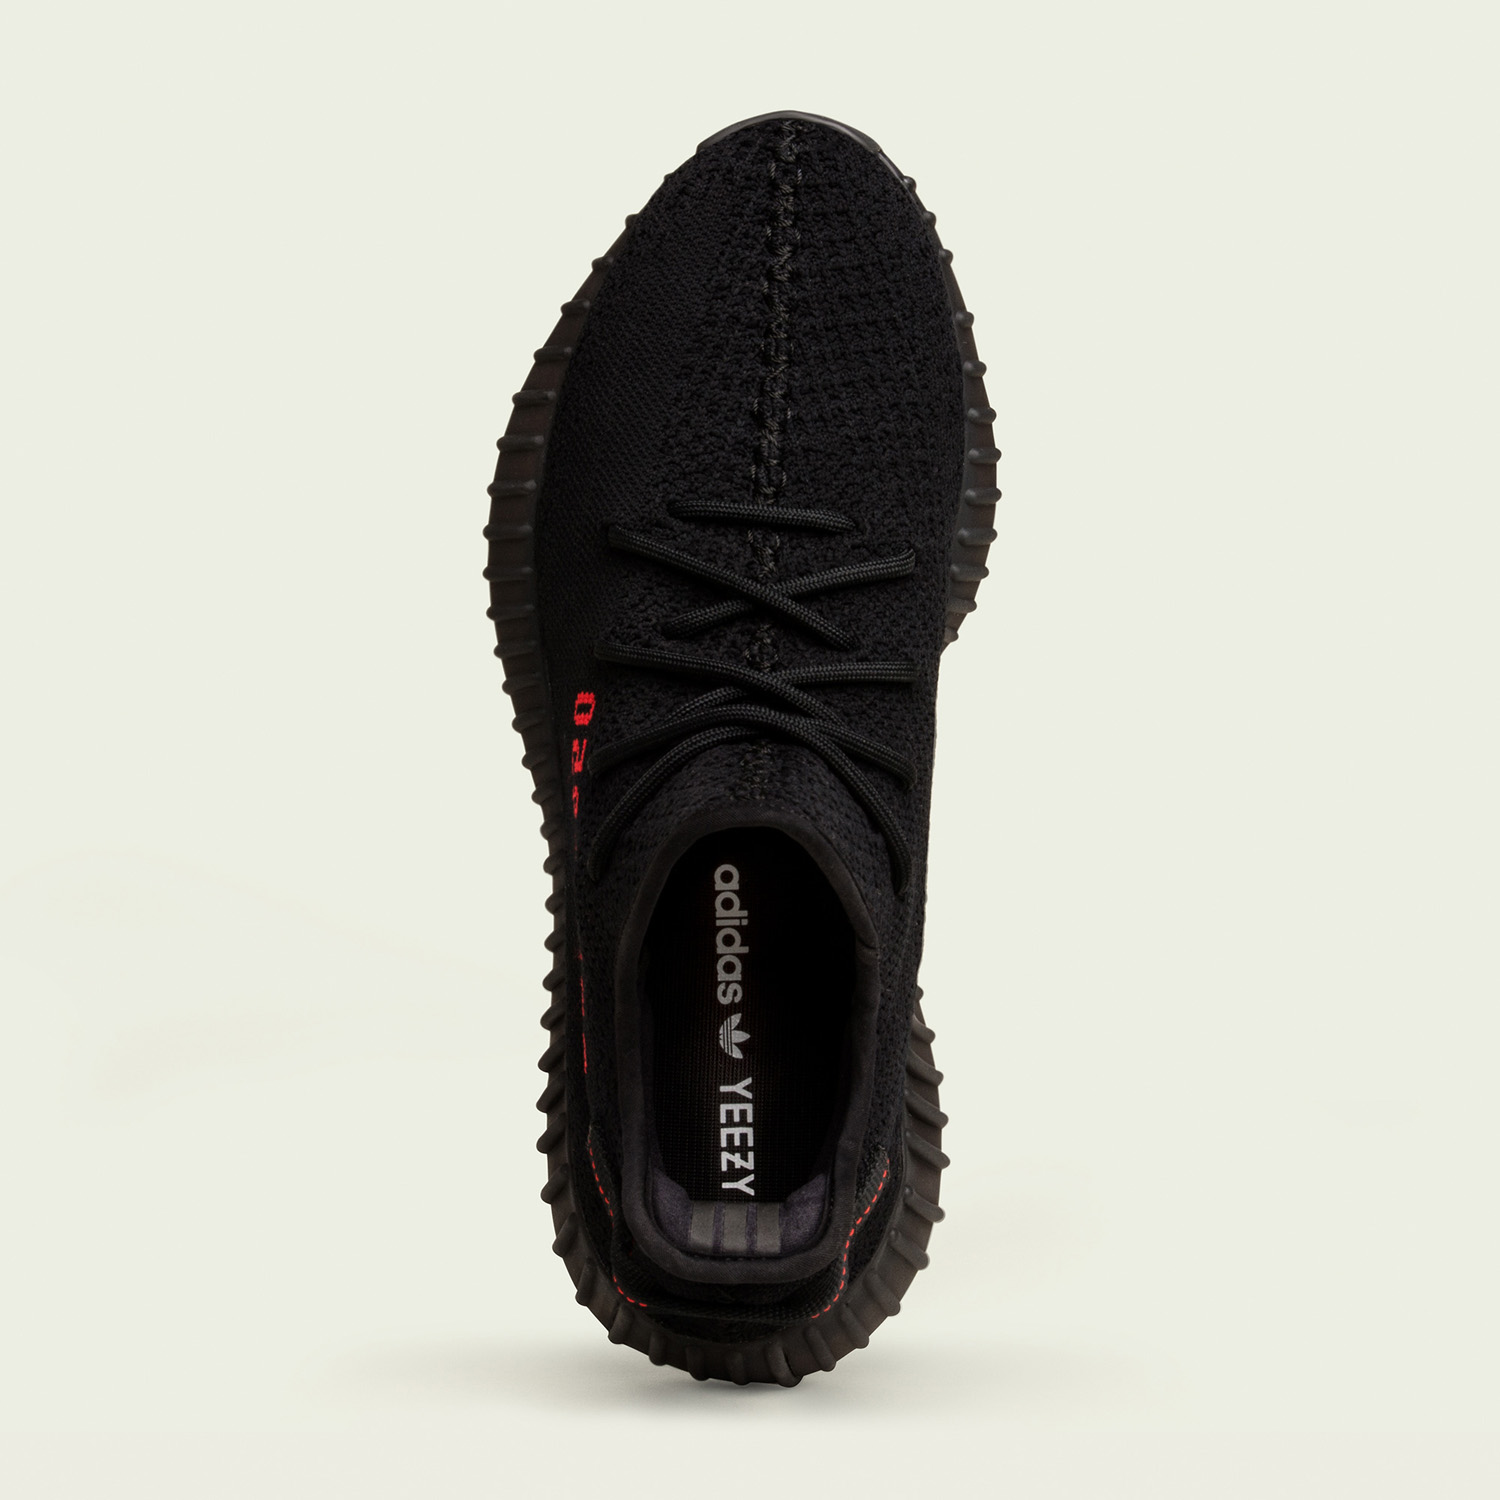 adidas_YEEZY_350_V2-red-black